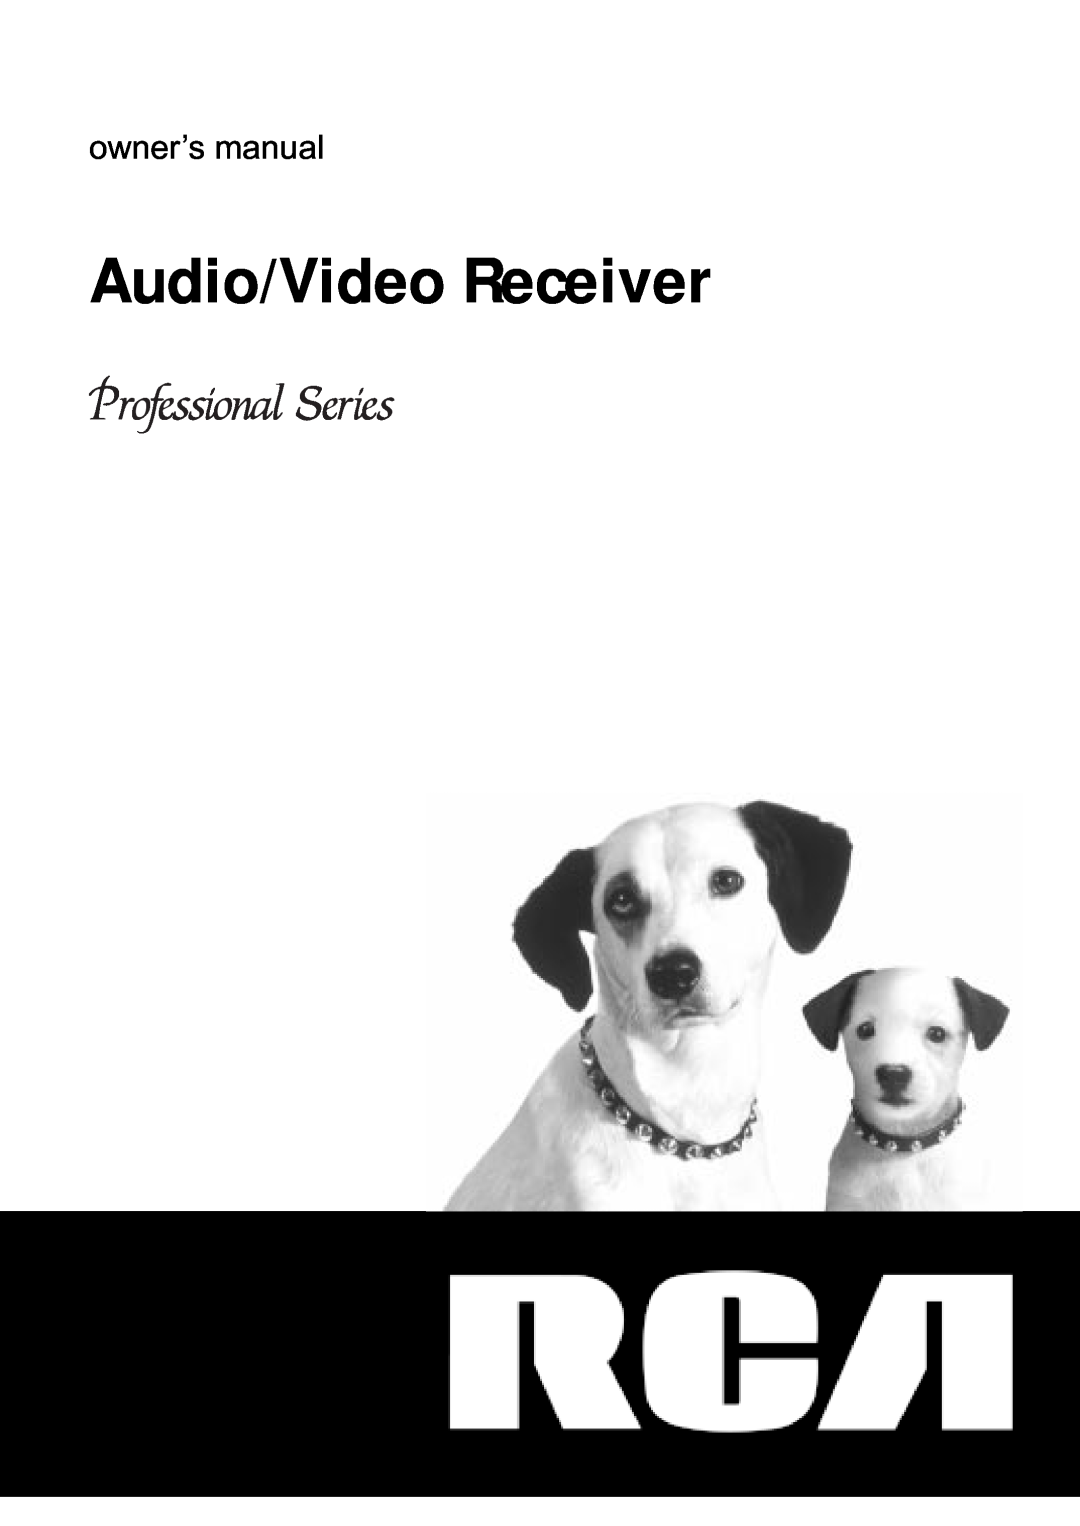 RCA STAV3860 owner manual Audio/Video Receiver, owner’s manual 